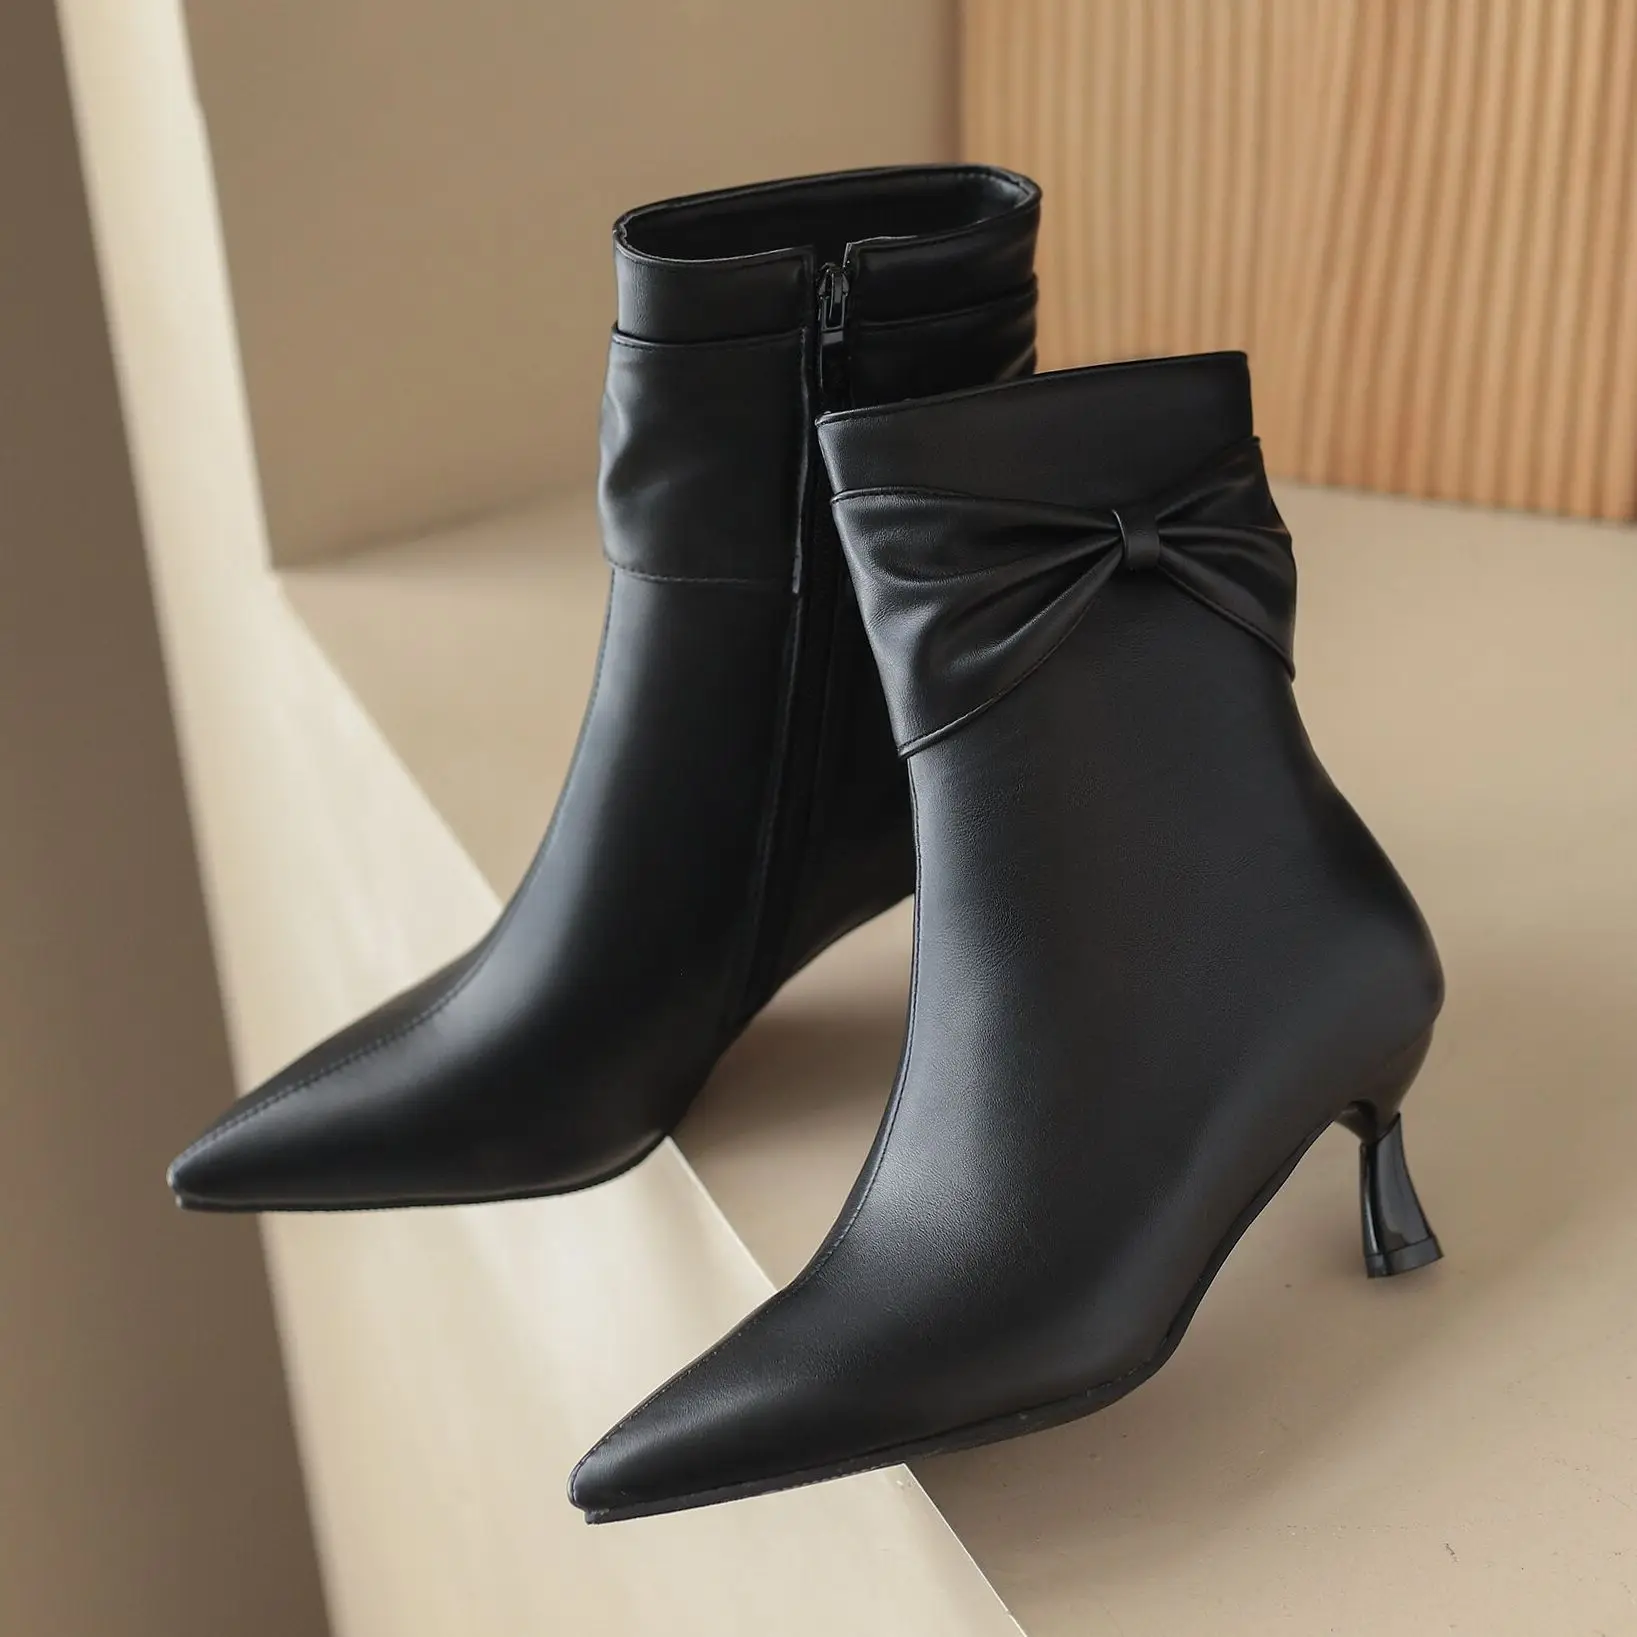 

Winter Women's Boots,Calf Height,High Heels,Pointed Toe Warm Short Plush,Butterfly-knot Design